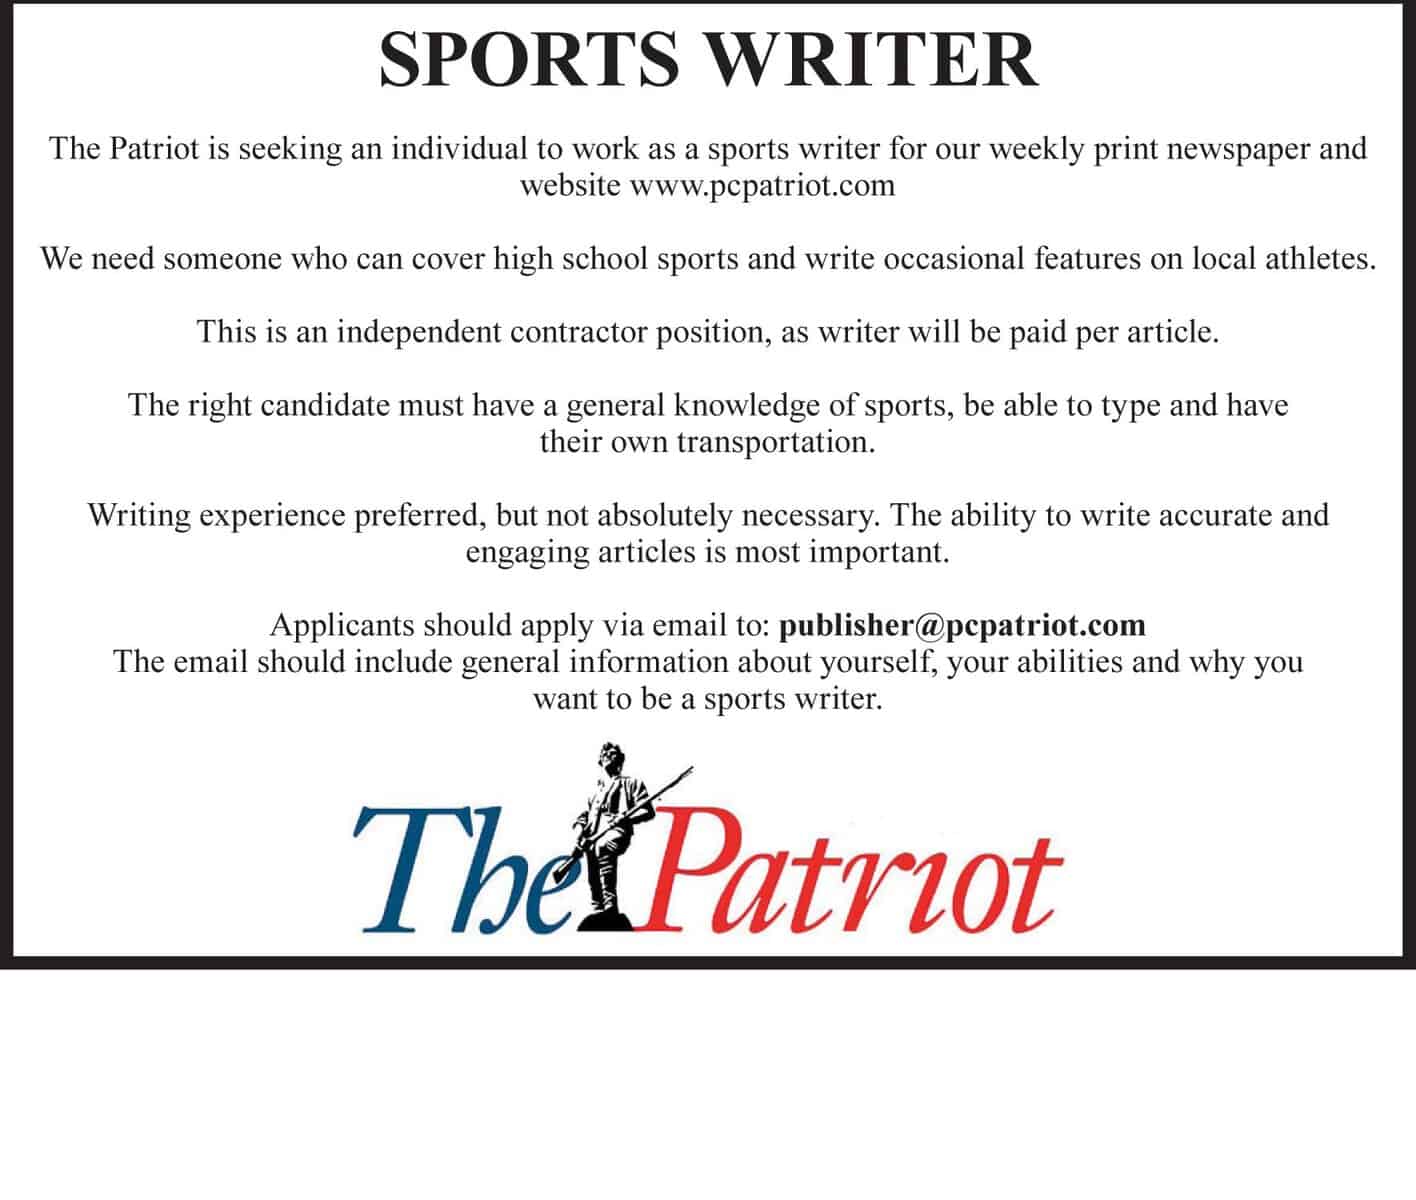 Sports Writer ad 7 3 copy